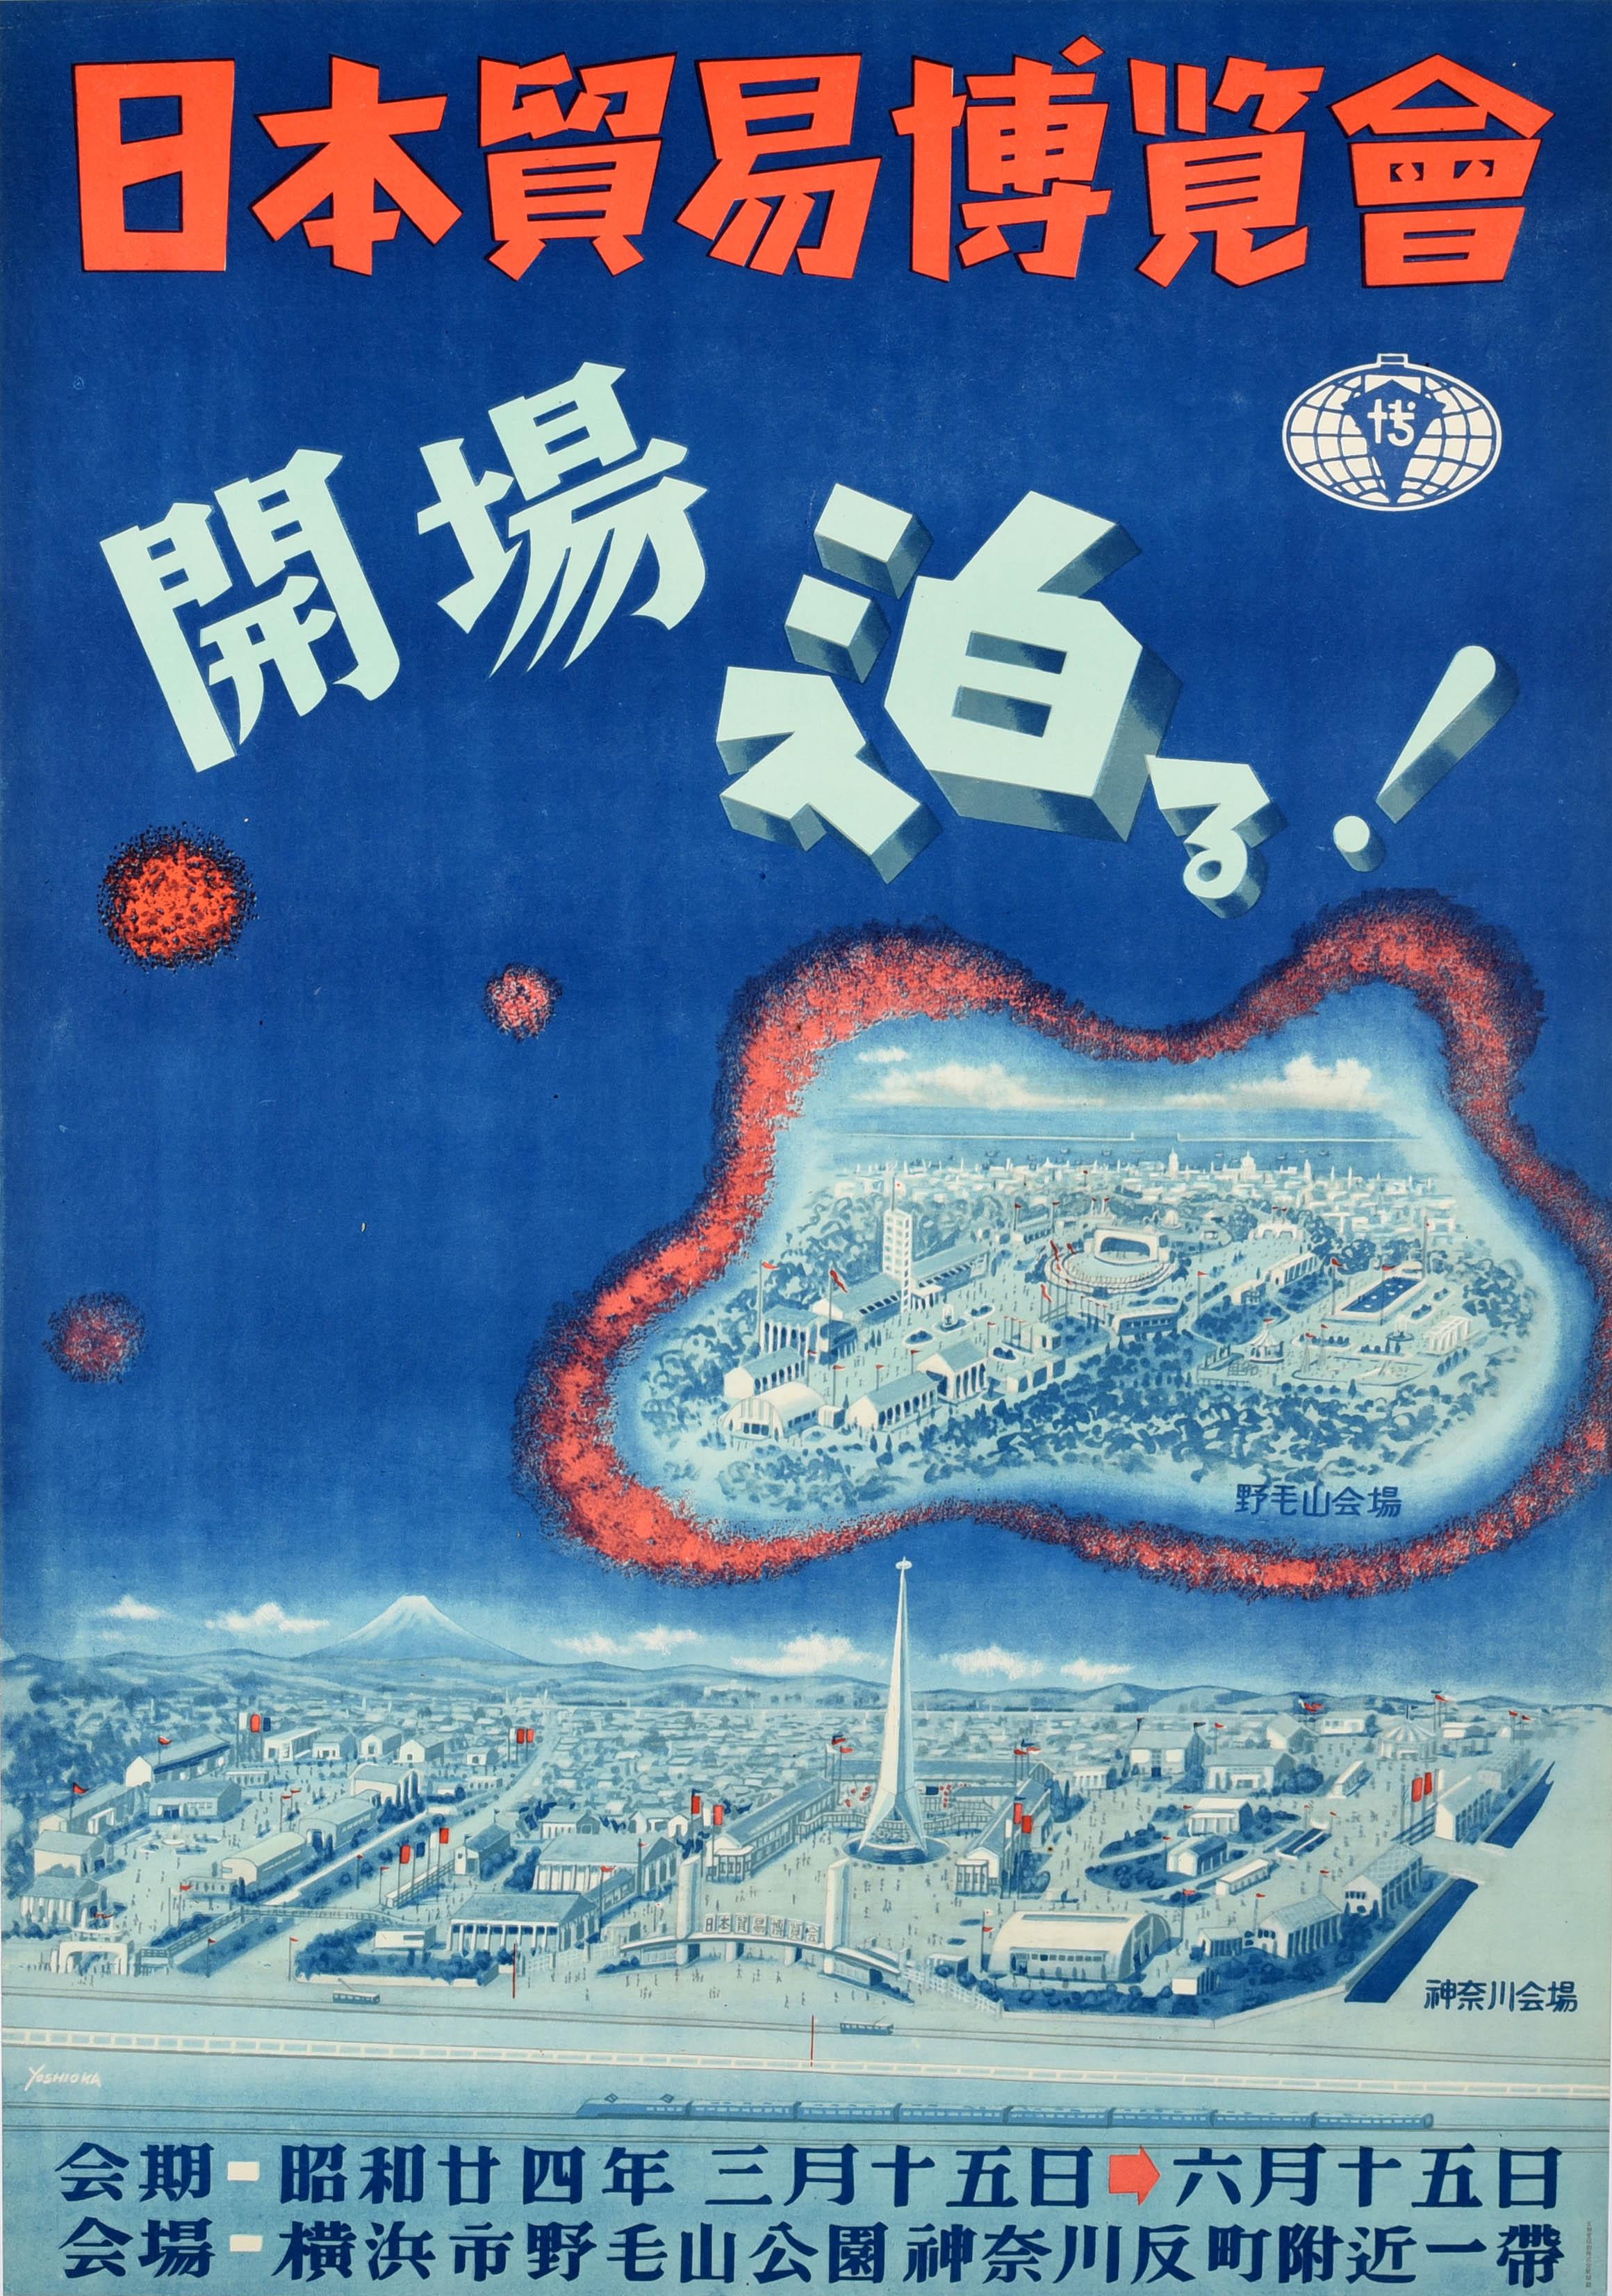 Unknown Print - Original Vintage Advertising Poster Japan Trade Expo Yokohama Tokyo Bay Design